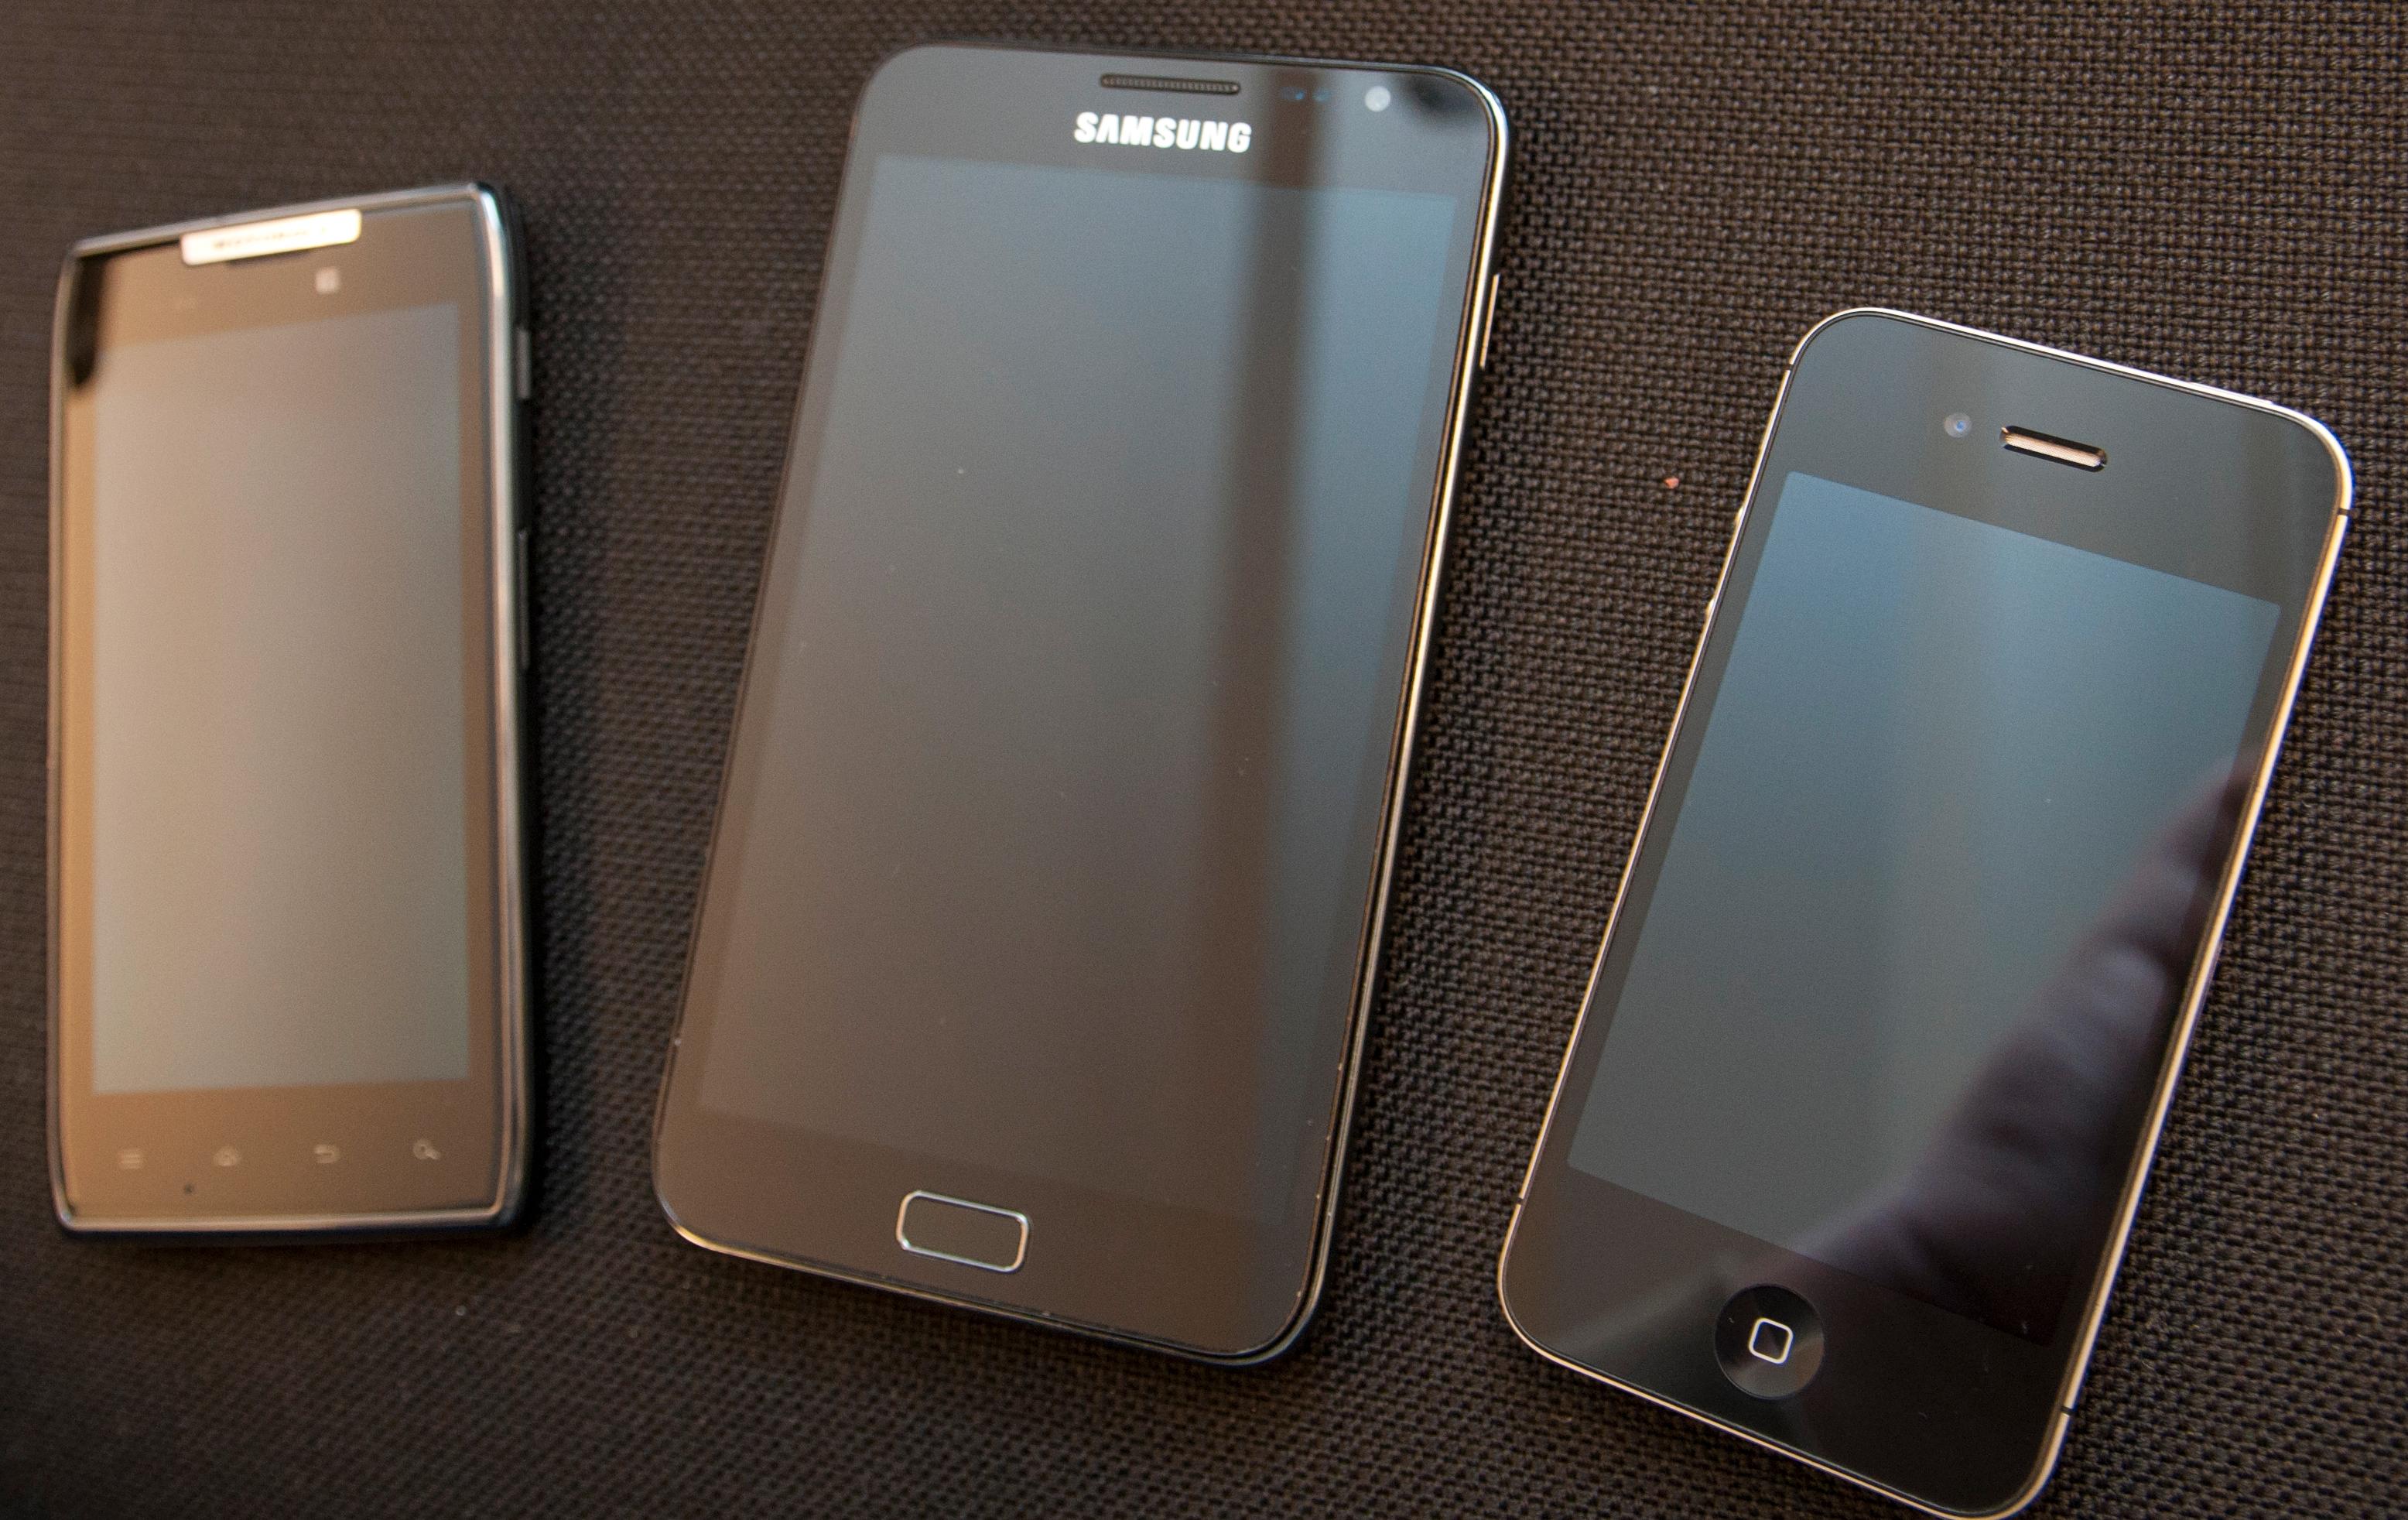 Motorola Razr, Samsung Galaxy Note og iPhone 4S var blant telefonene vi brukte i testperioden.